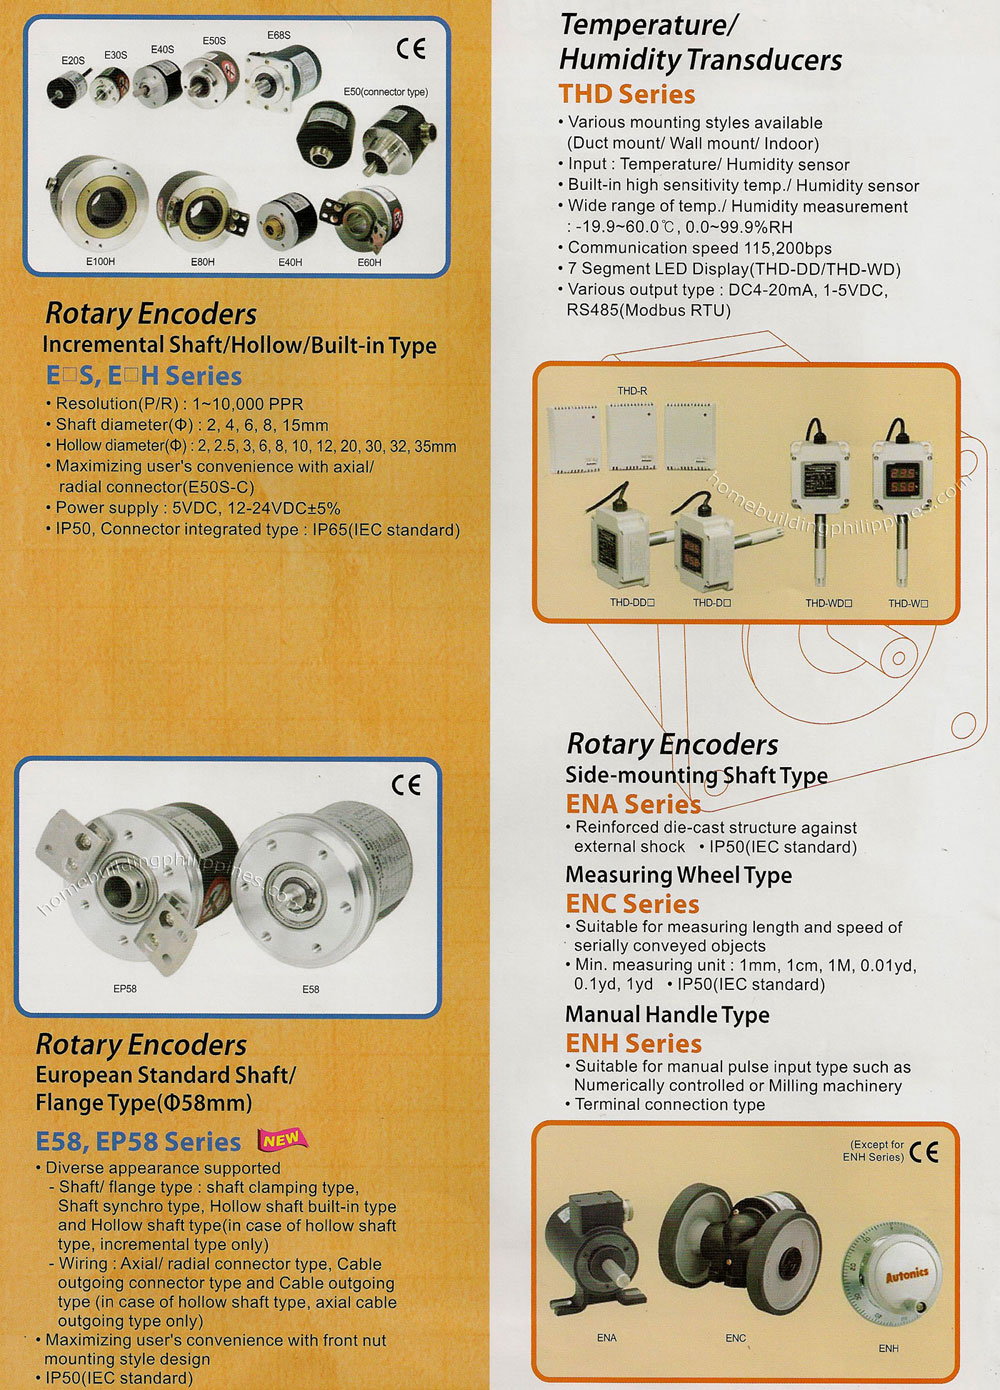 Rotary Encoders, Temperature/Humidity Transducers